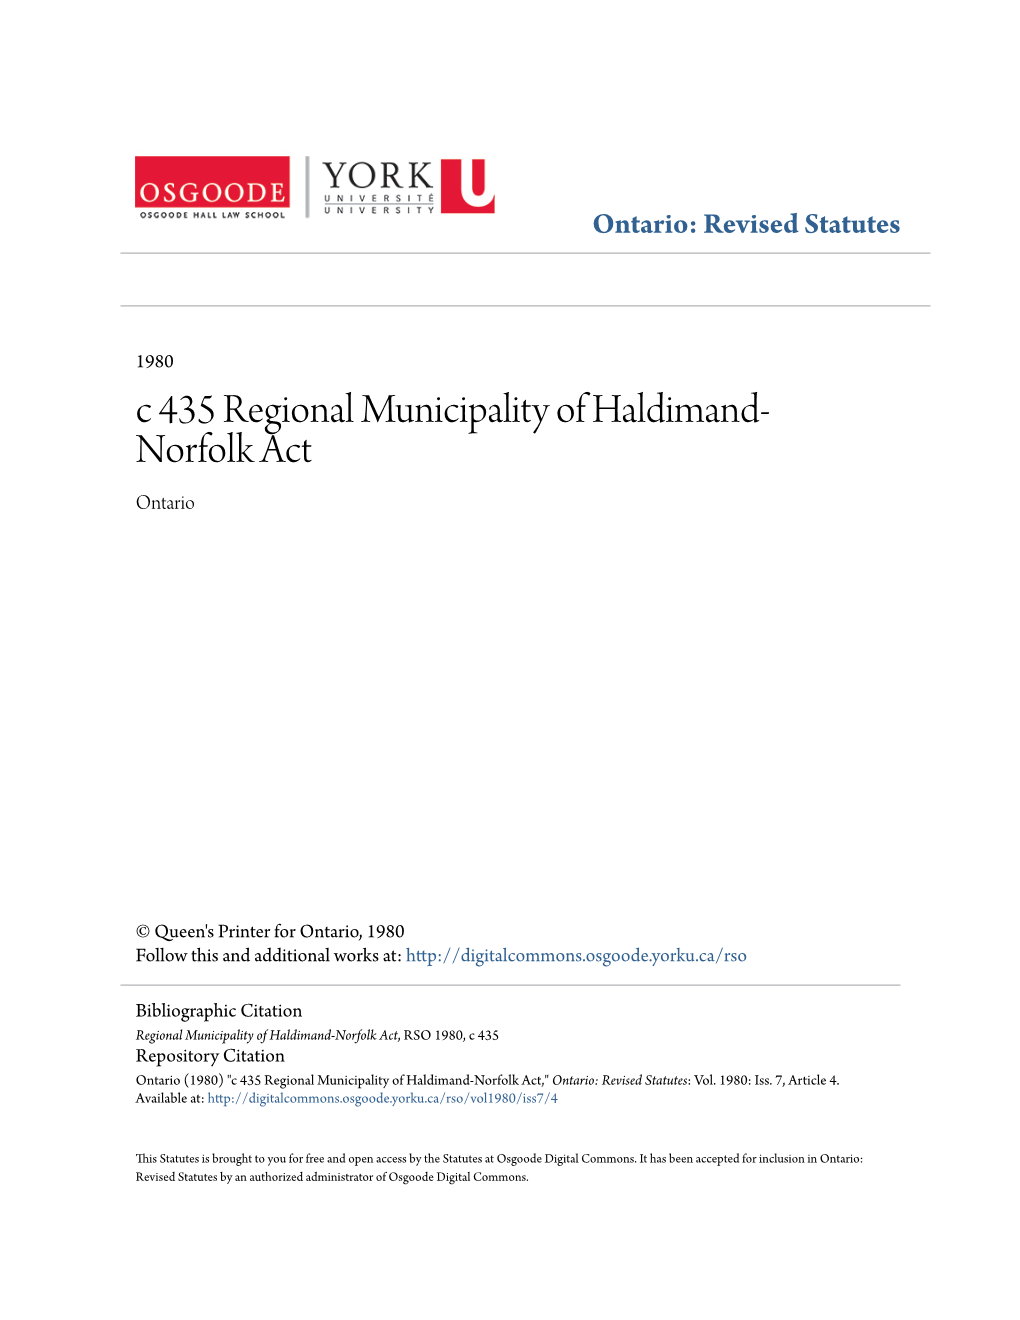 C 435 Regional Municipality of Haldimand-Norfolk Act," Ontario: Revised Statutes: Vol